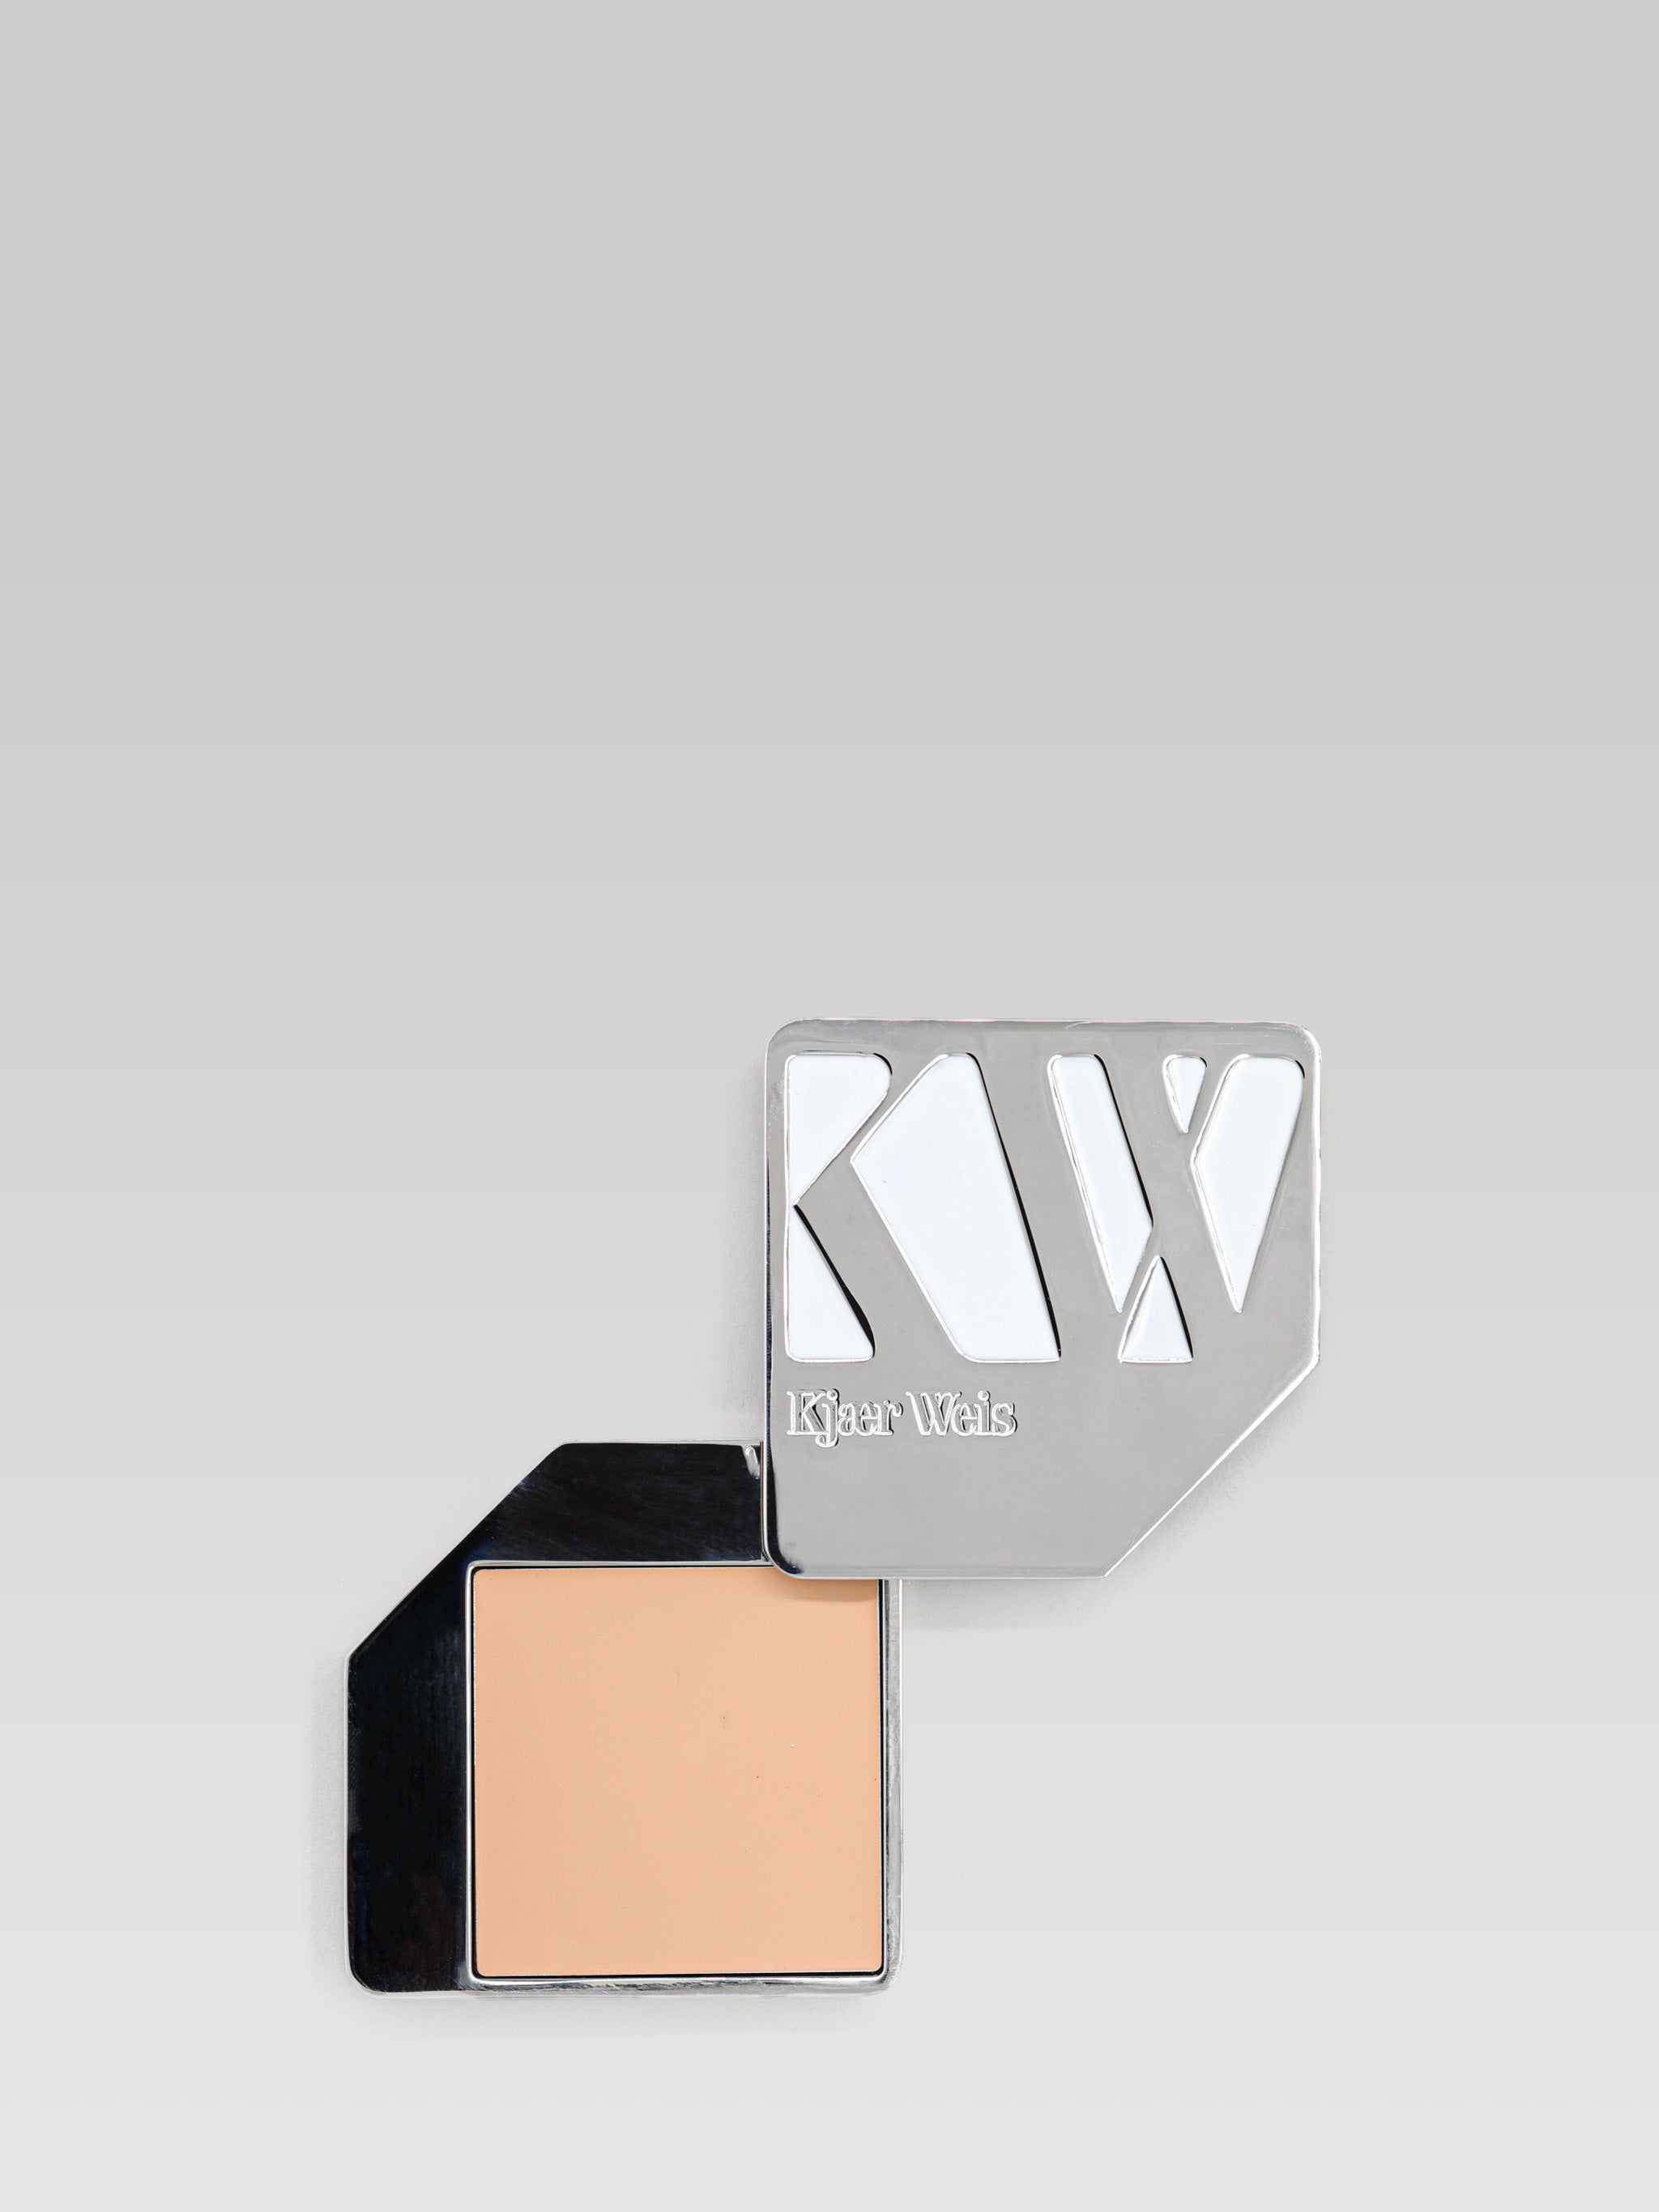 Kjaer Weis Cream Foundation Subtlety product packaging